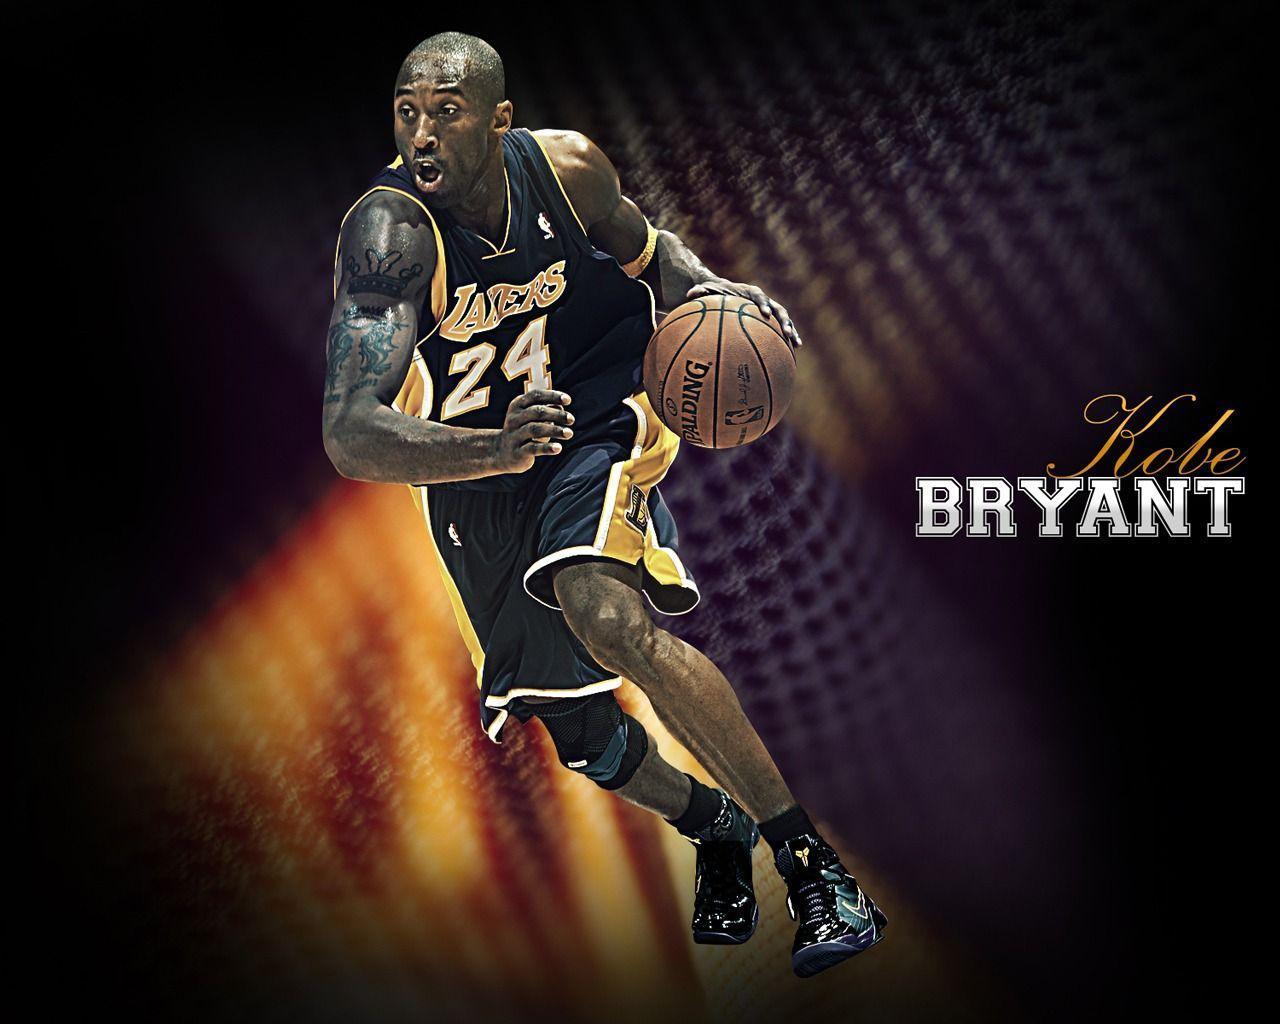 Kobe Bryant Wallpaper NBA Sports Wallpaper in jpg format for free